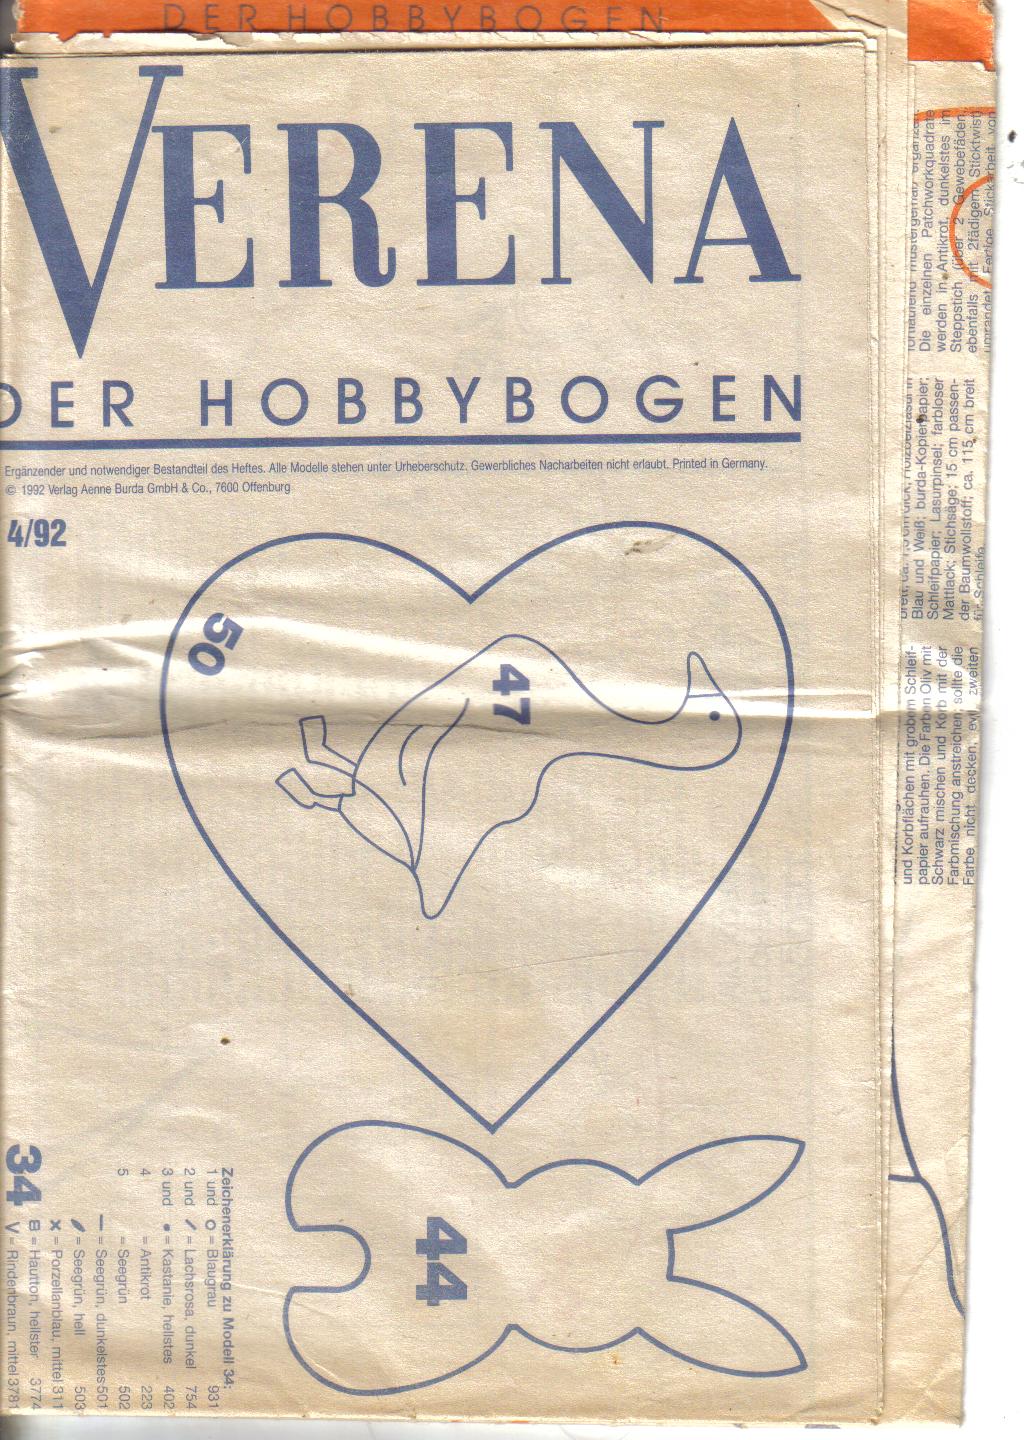 Verena- der Hobbybogen 04/92